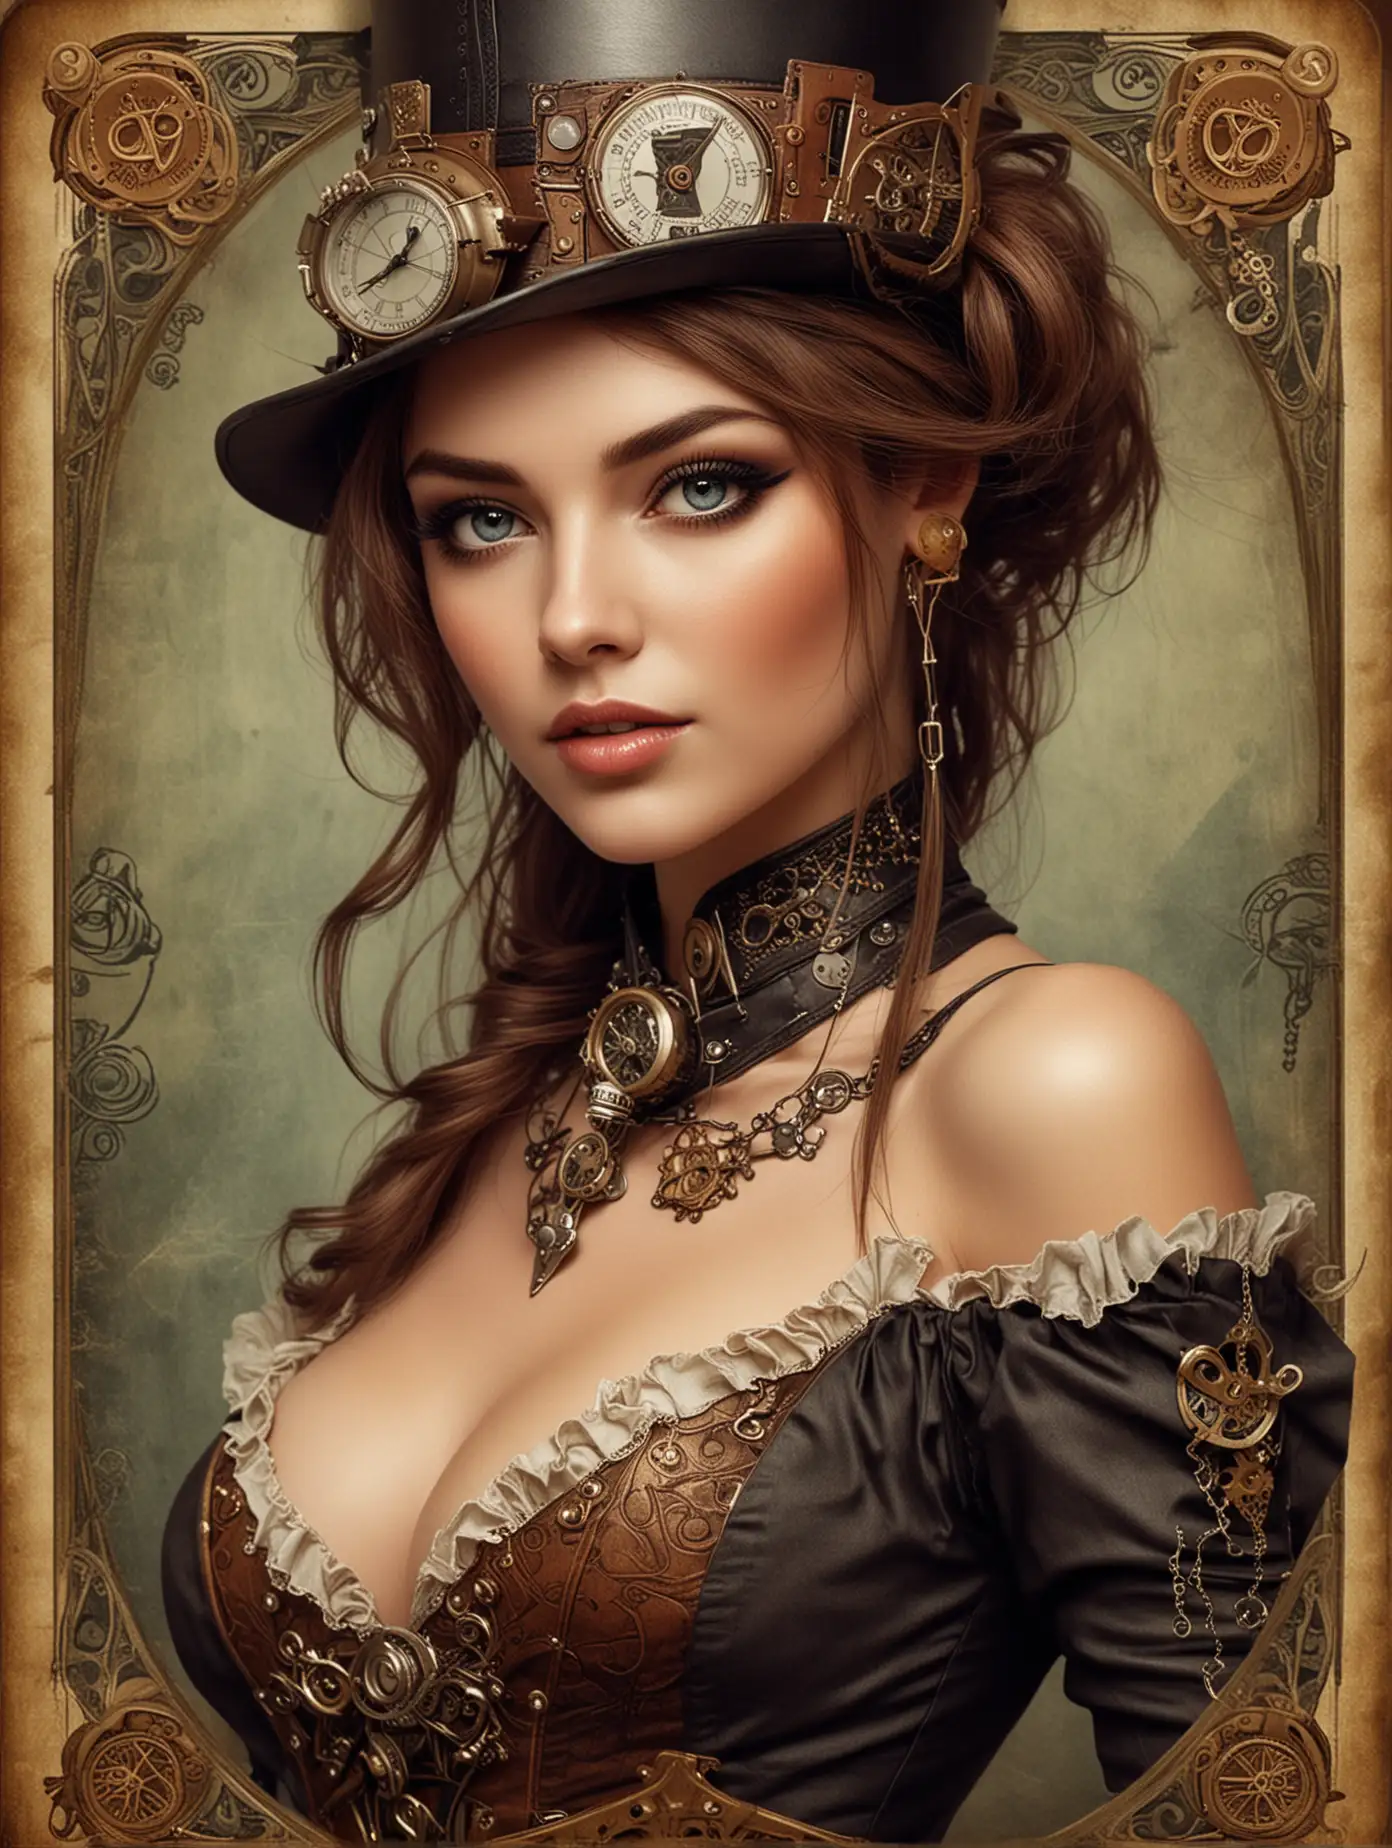 perfect steampunk beautiful woman on a playing card